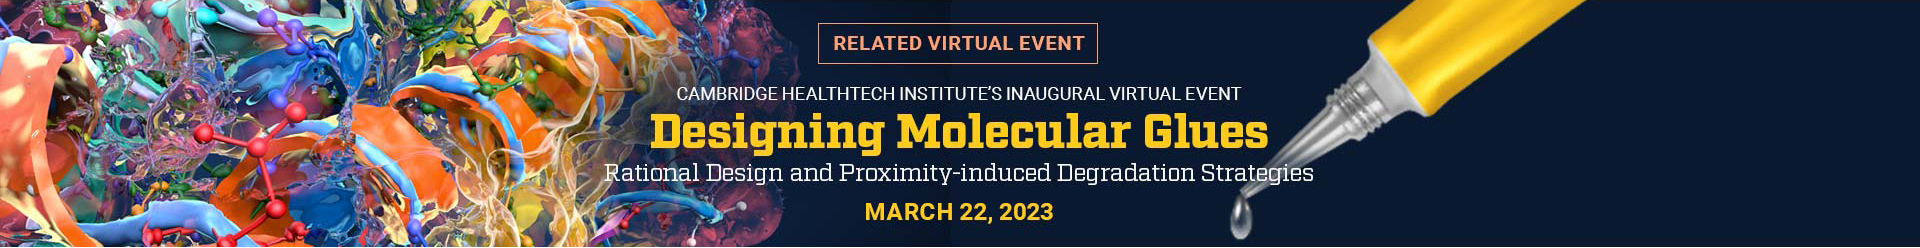 Related Virtual Event: Designing Molecular Glues